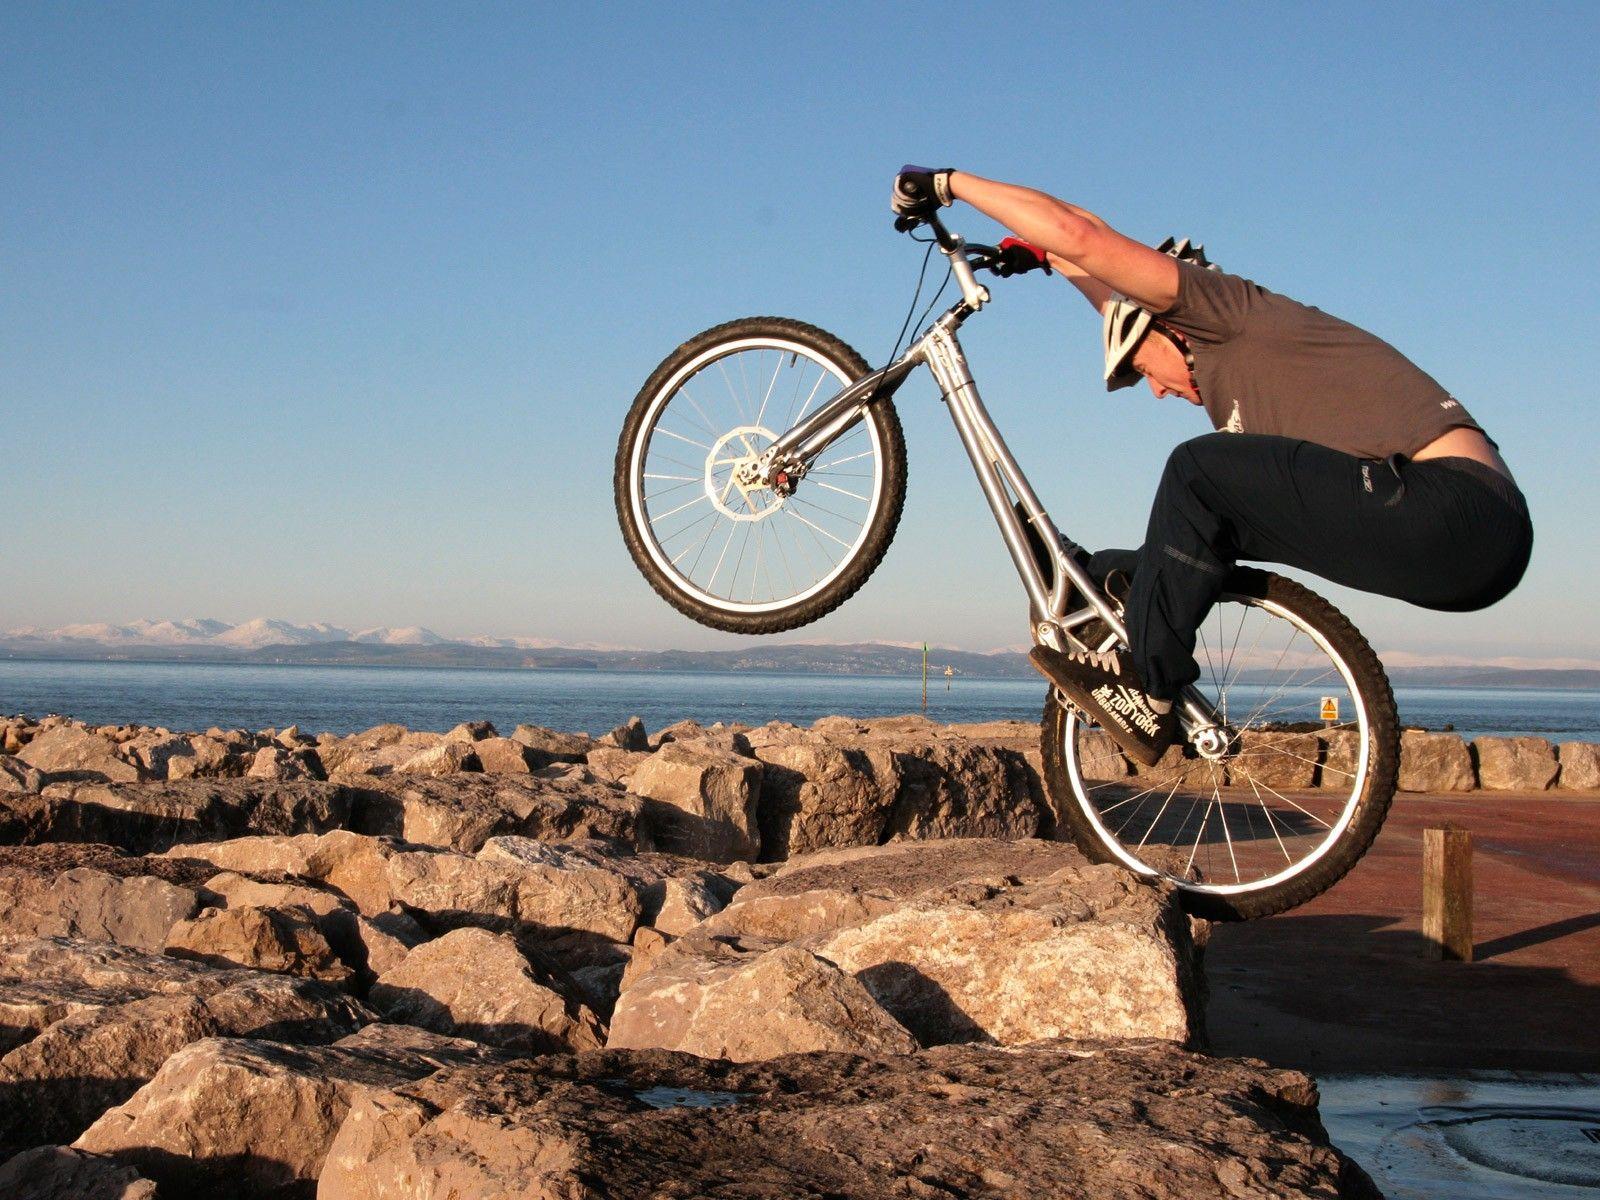 Download the Rocky Mountain Bike Wallpaper, Rocky Mountain Bike